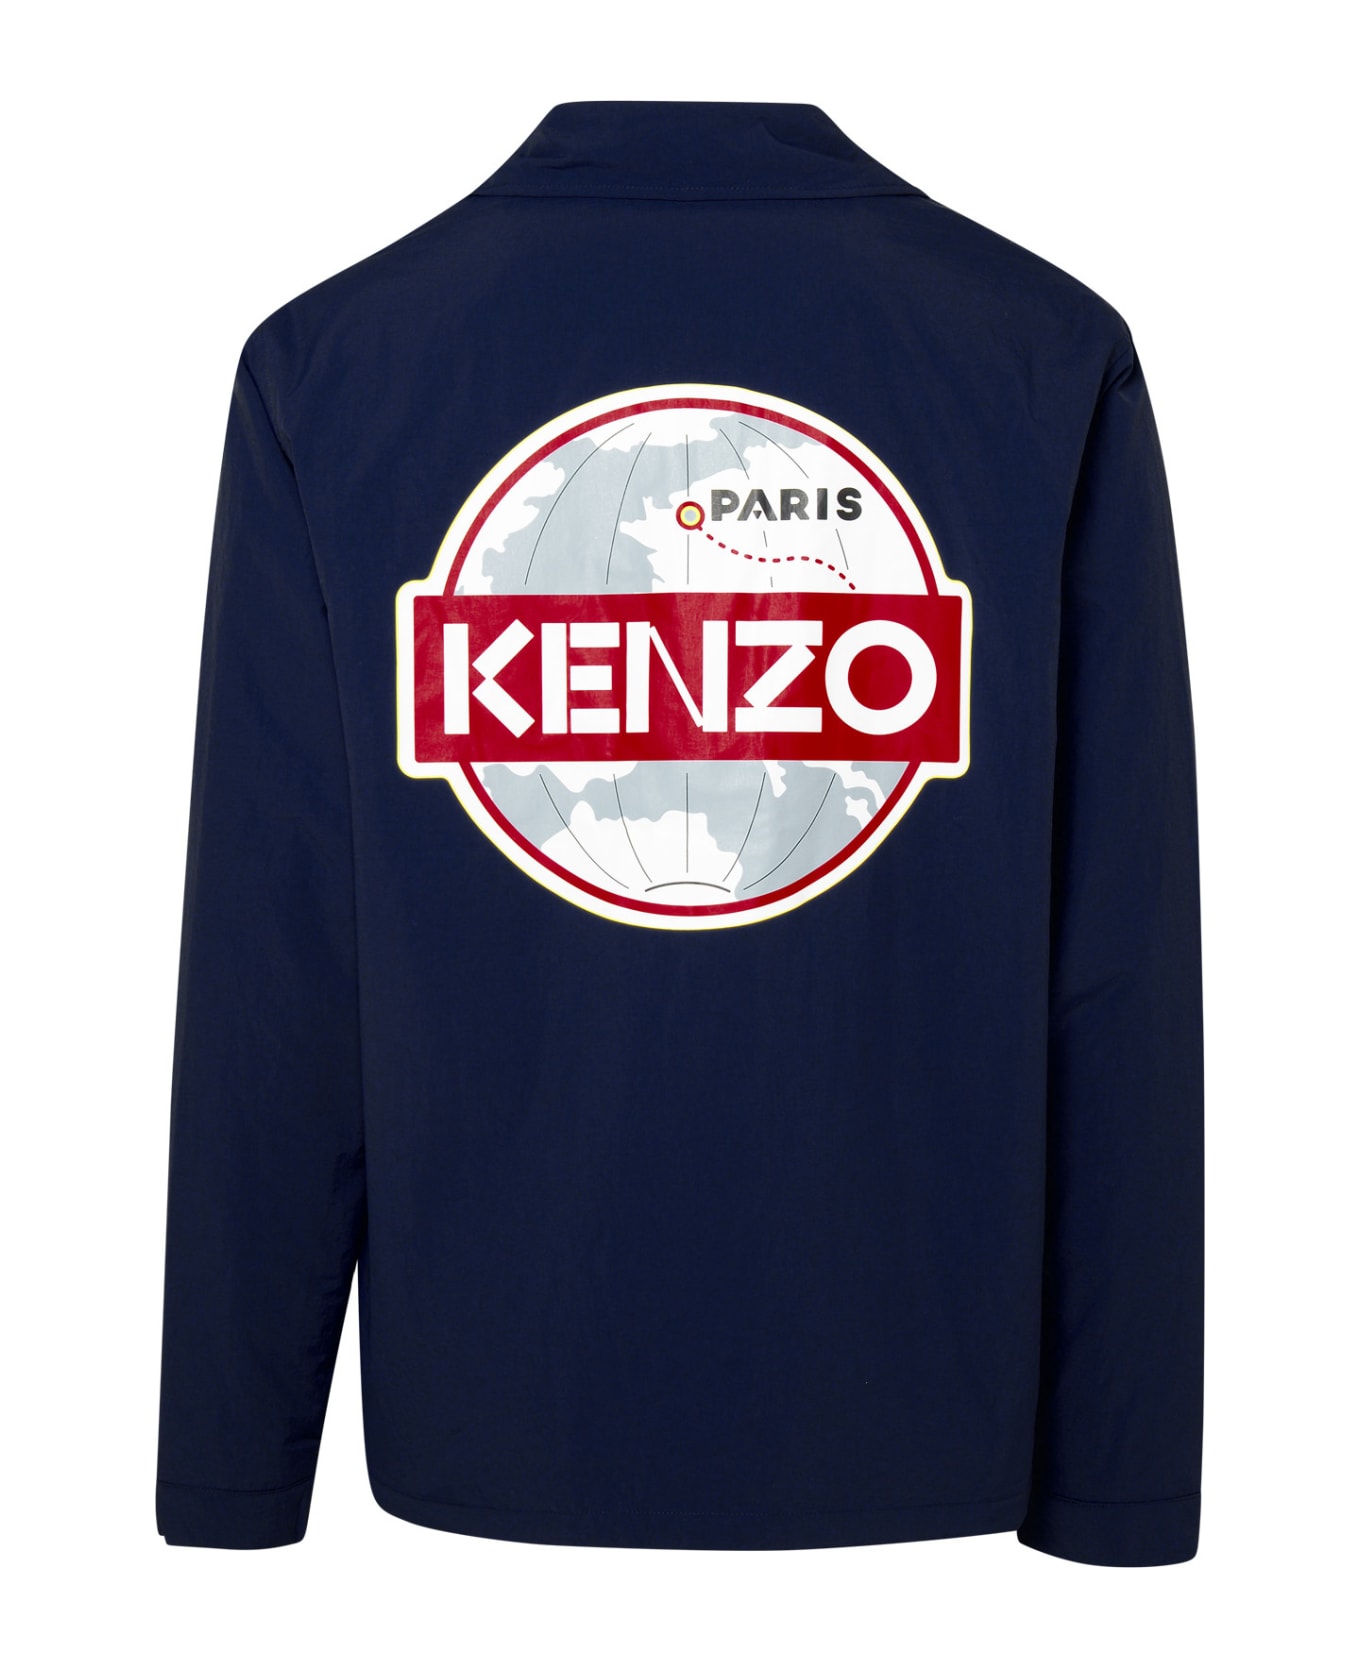 Kenzo Padded Jacket - MIDNIGHT BLUE